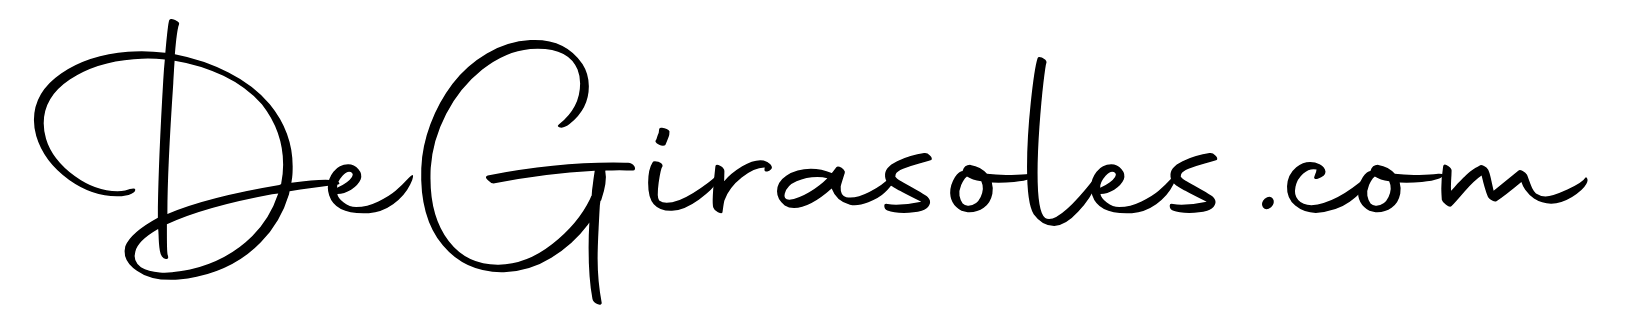 Logo de girasoles negro